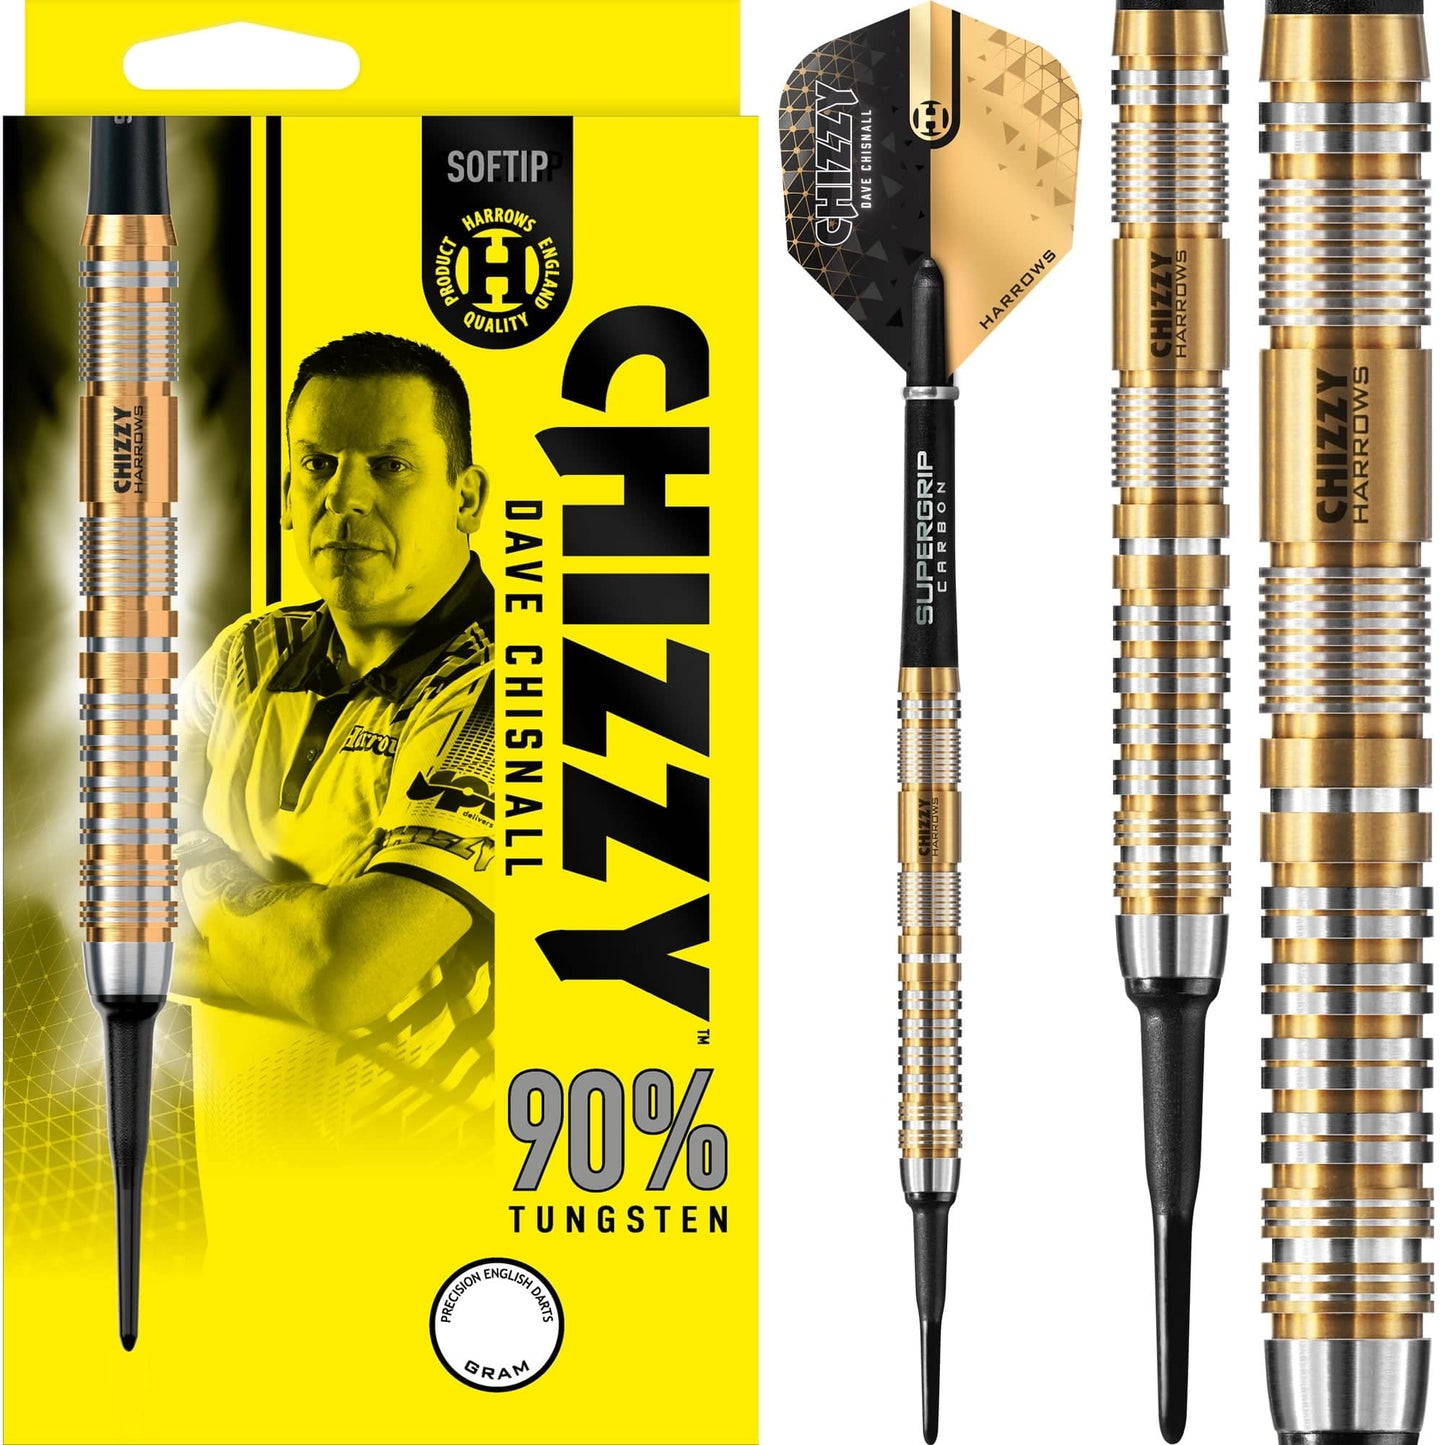 Harrows Chizzy v2 Darts - Soft Tip - 90% - Dave Chisnall - Gold Titanium 18g